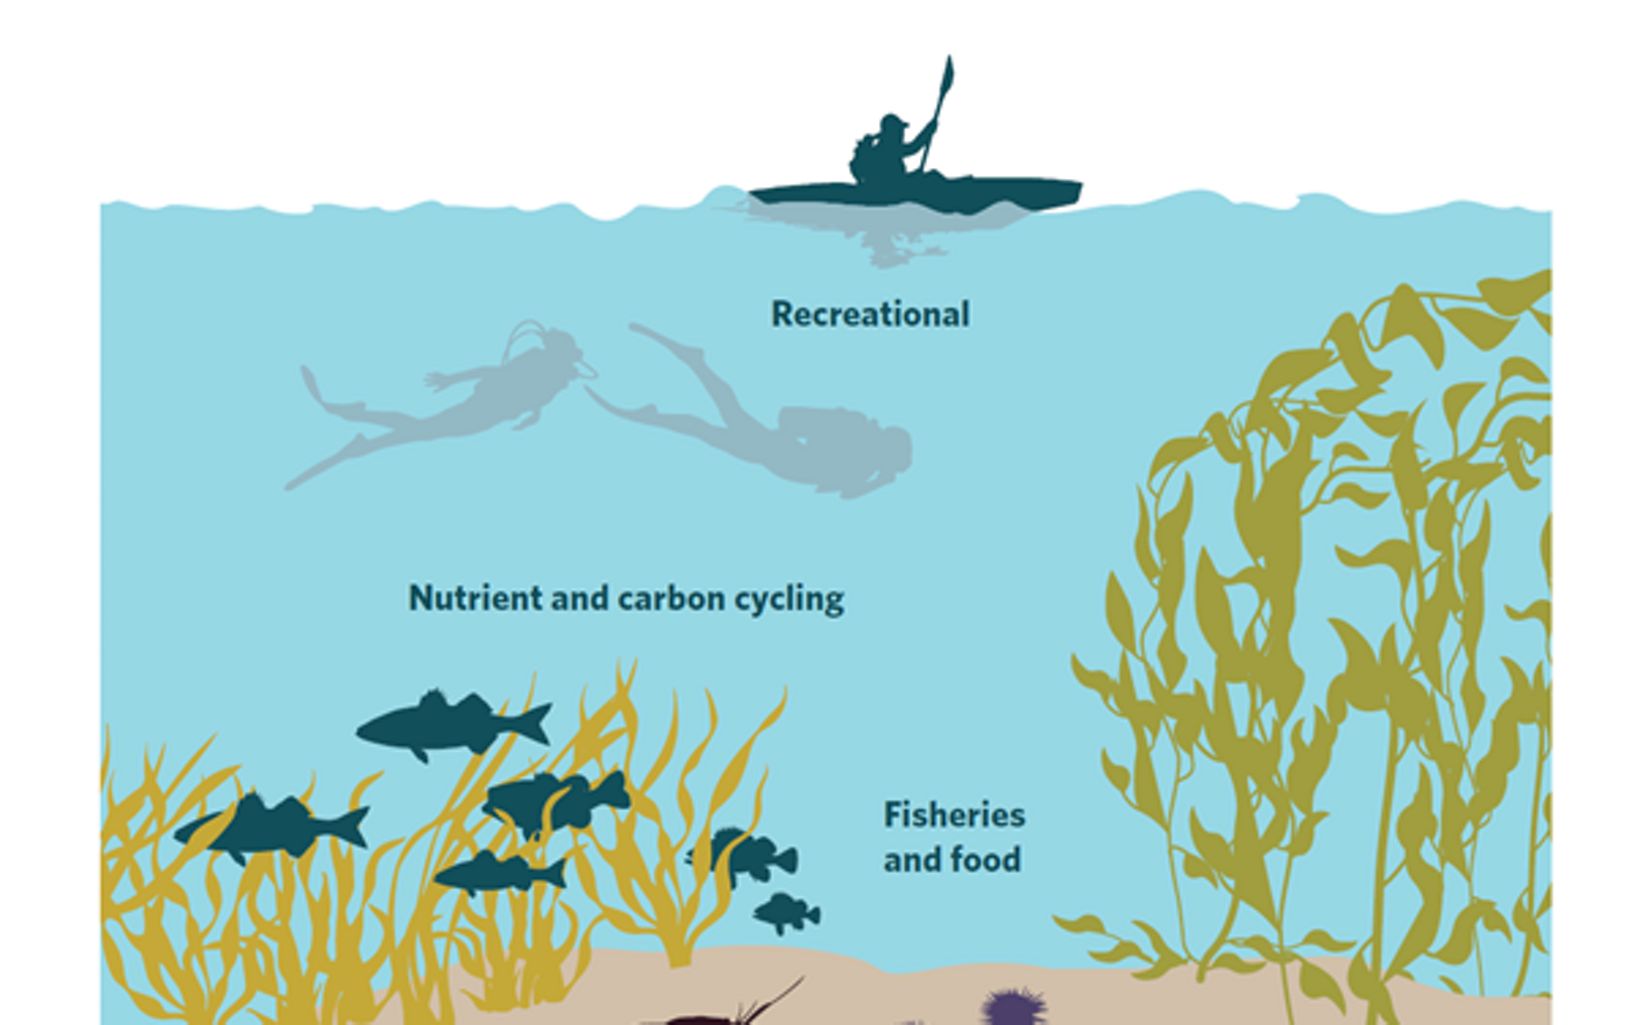 kelp forest ecosystem diagram